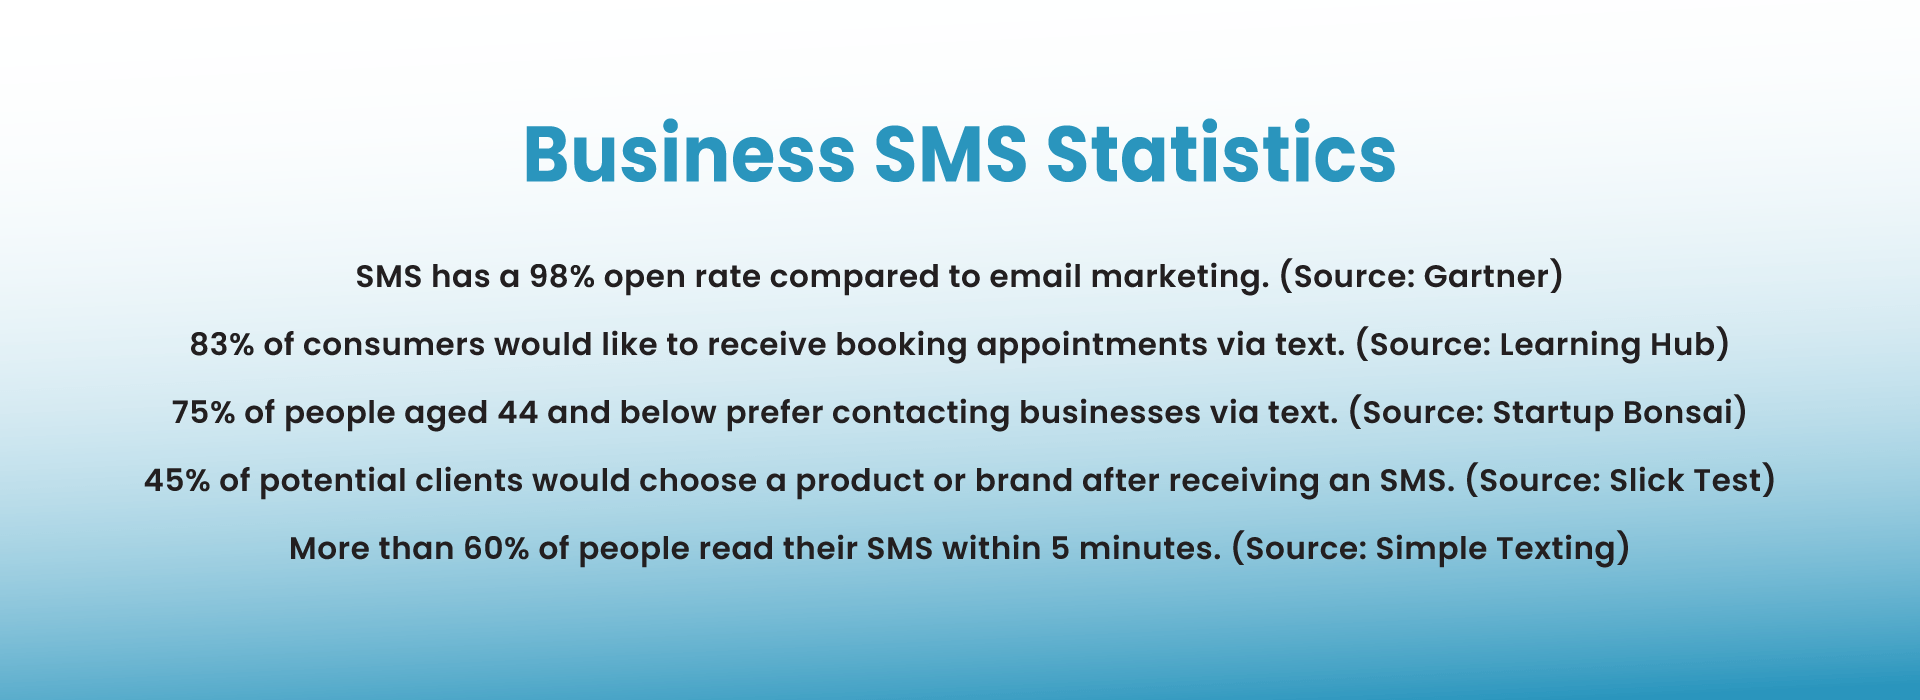 Business SMS Statistics